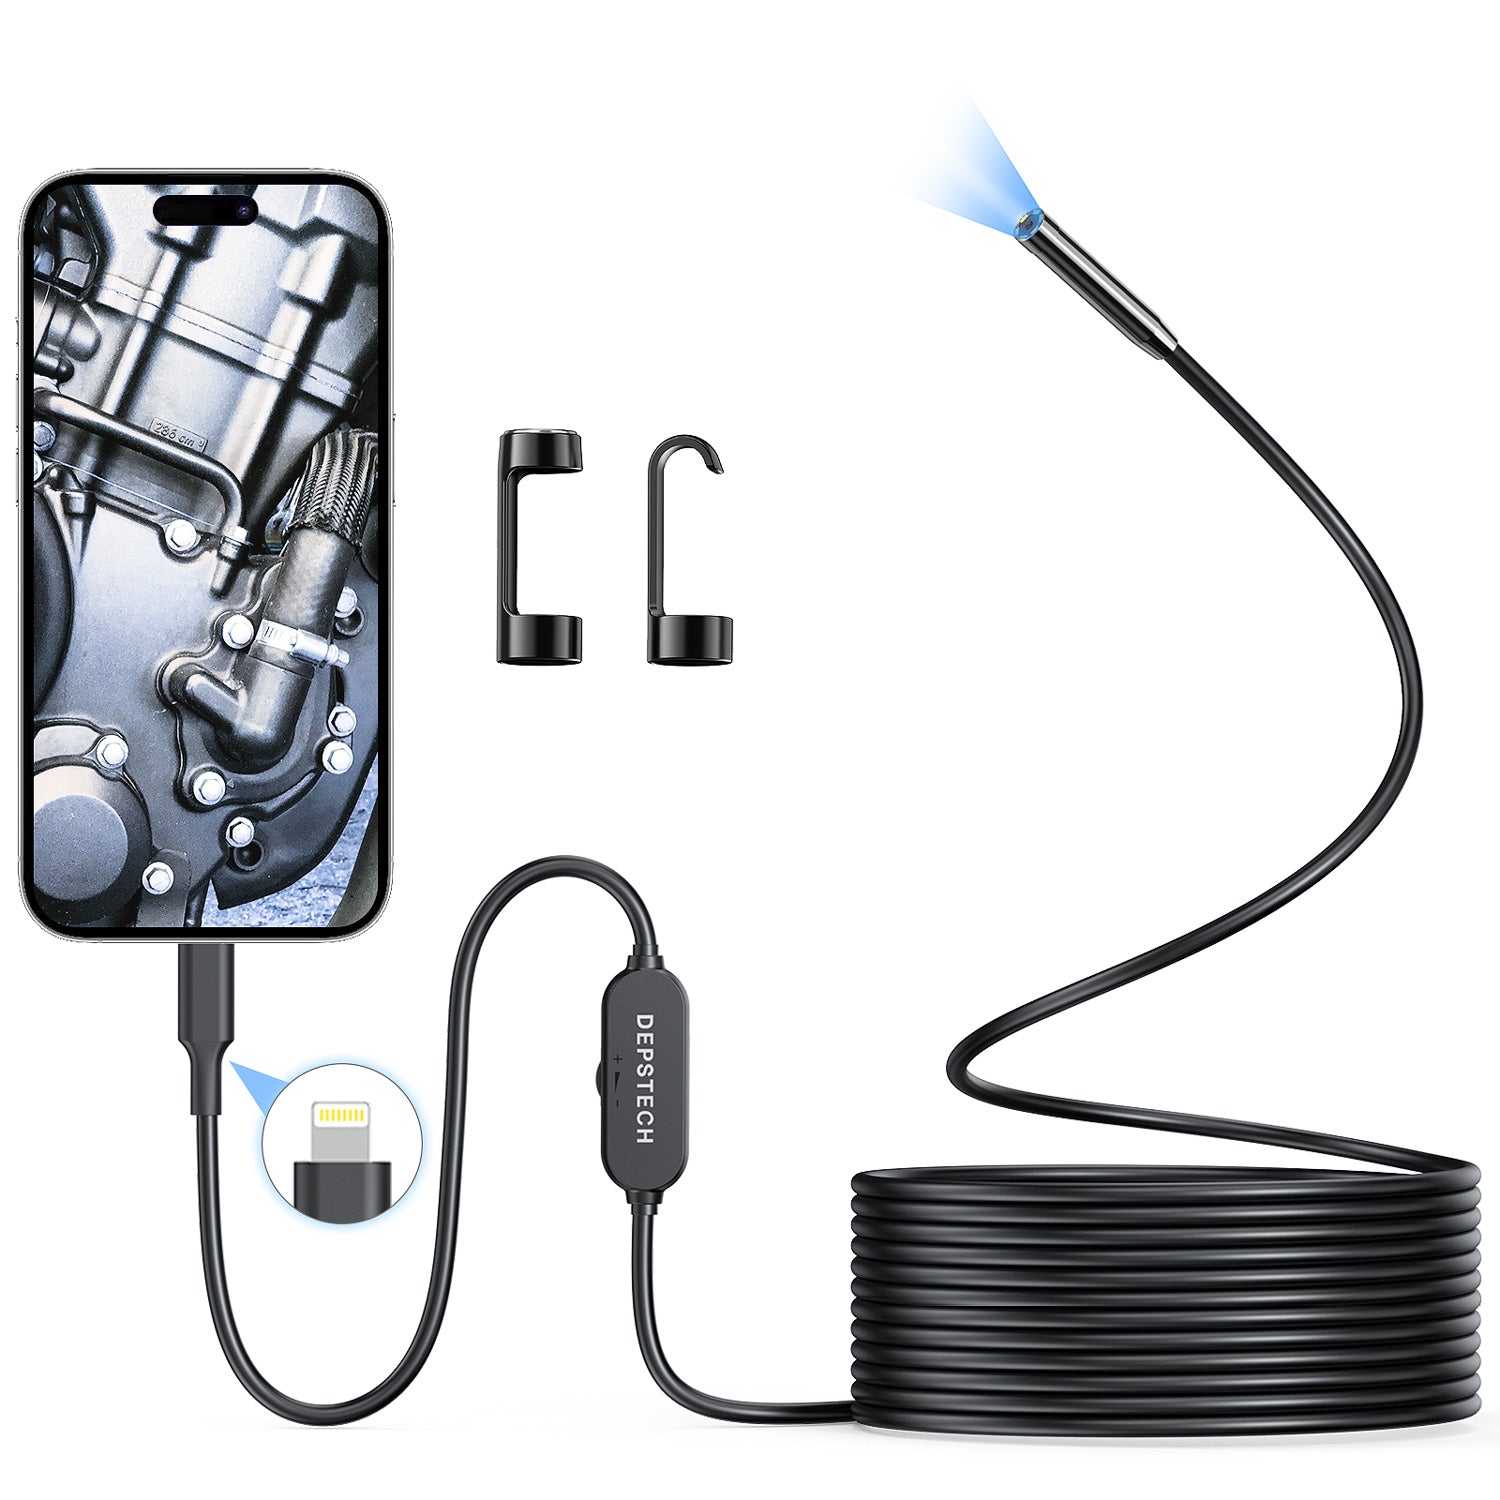 DEPSTECH NTC53 Endoscope Waterproof Snake Camera for iPhone and iPad